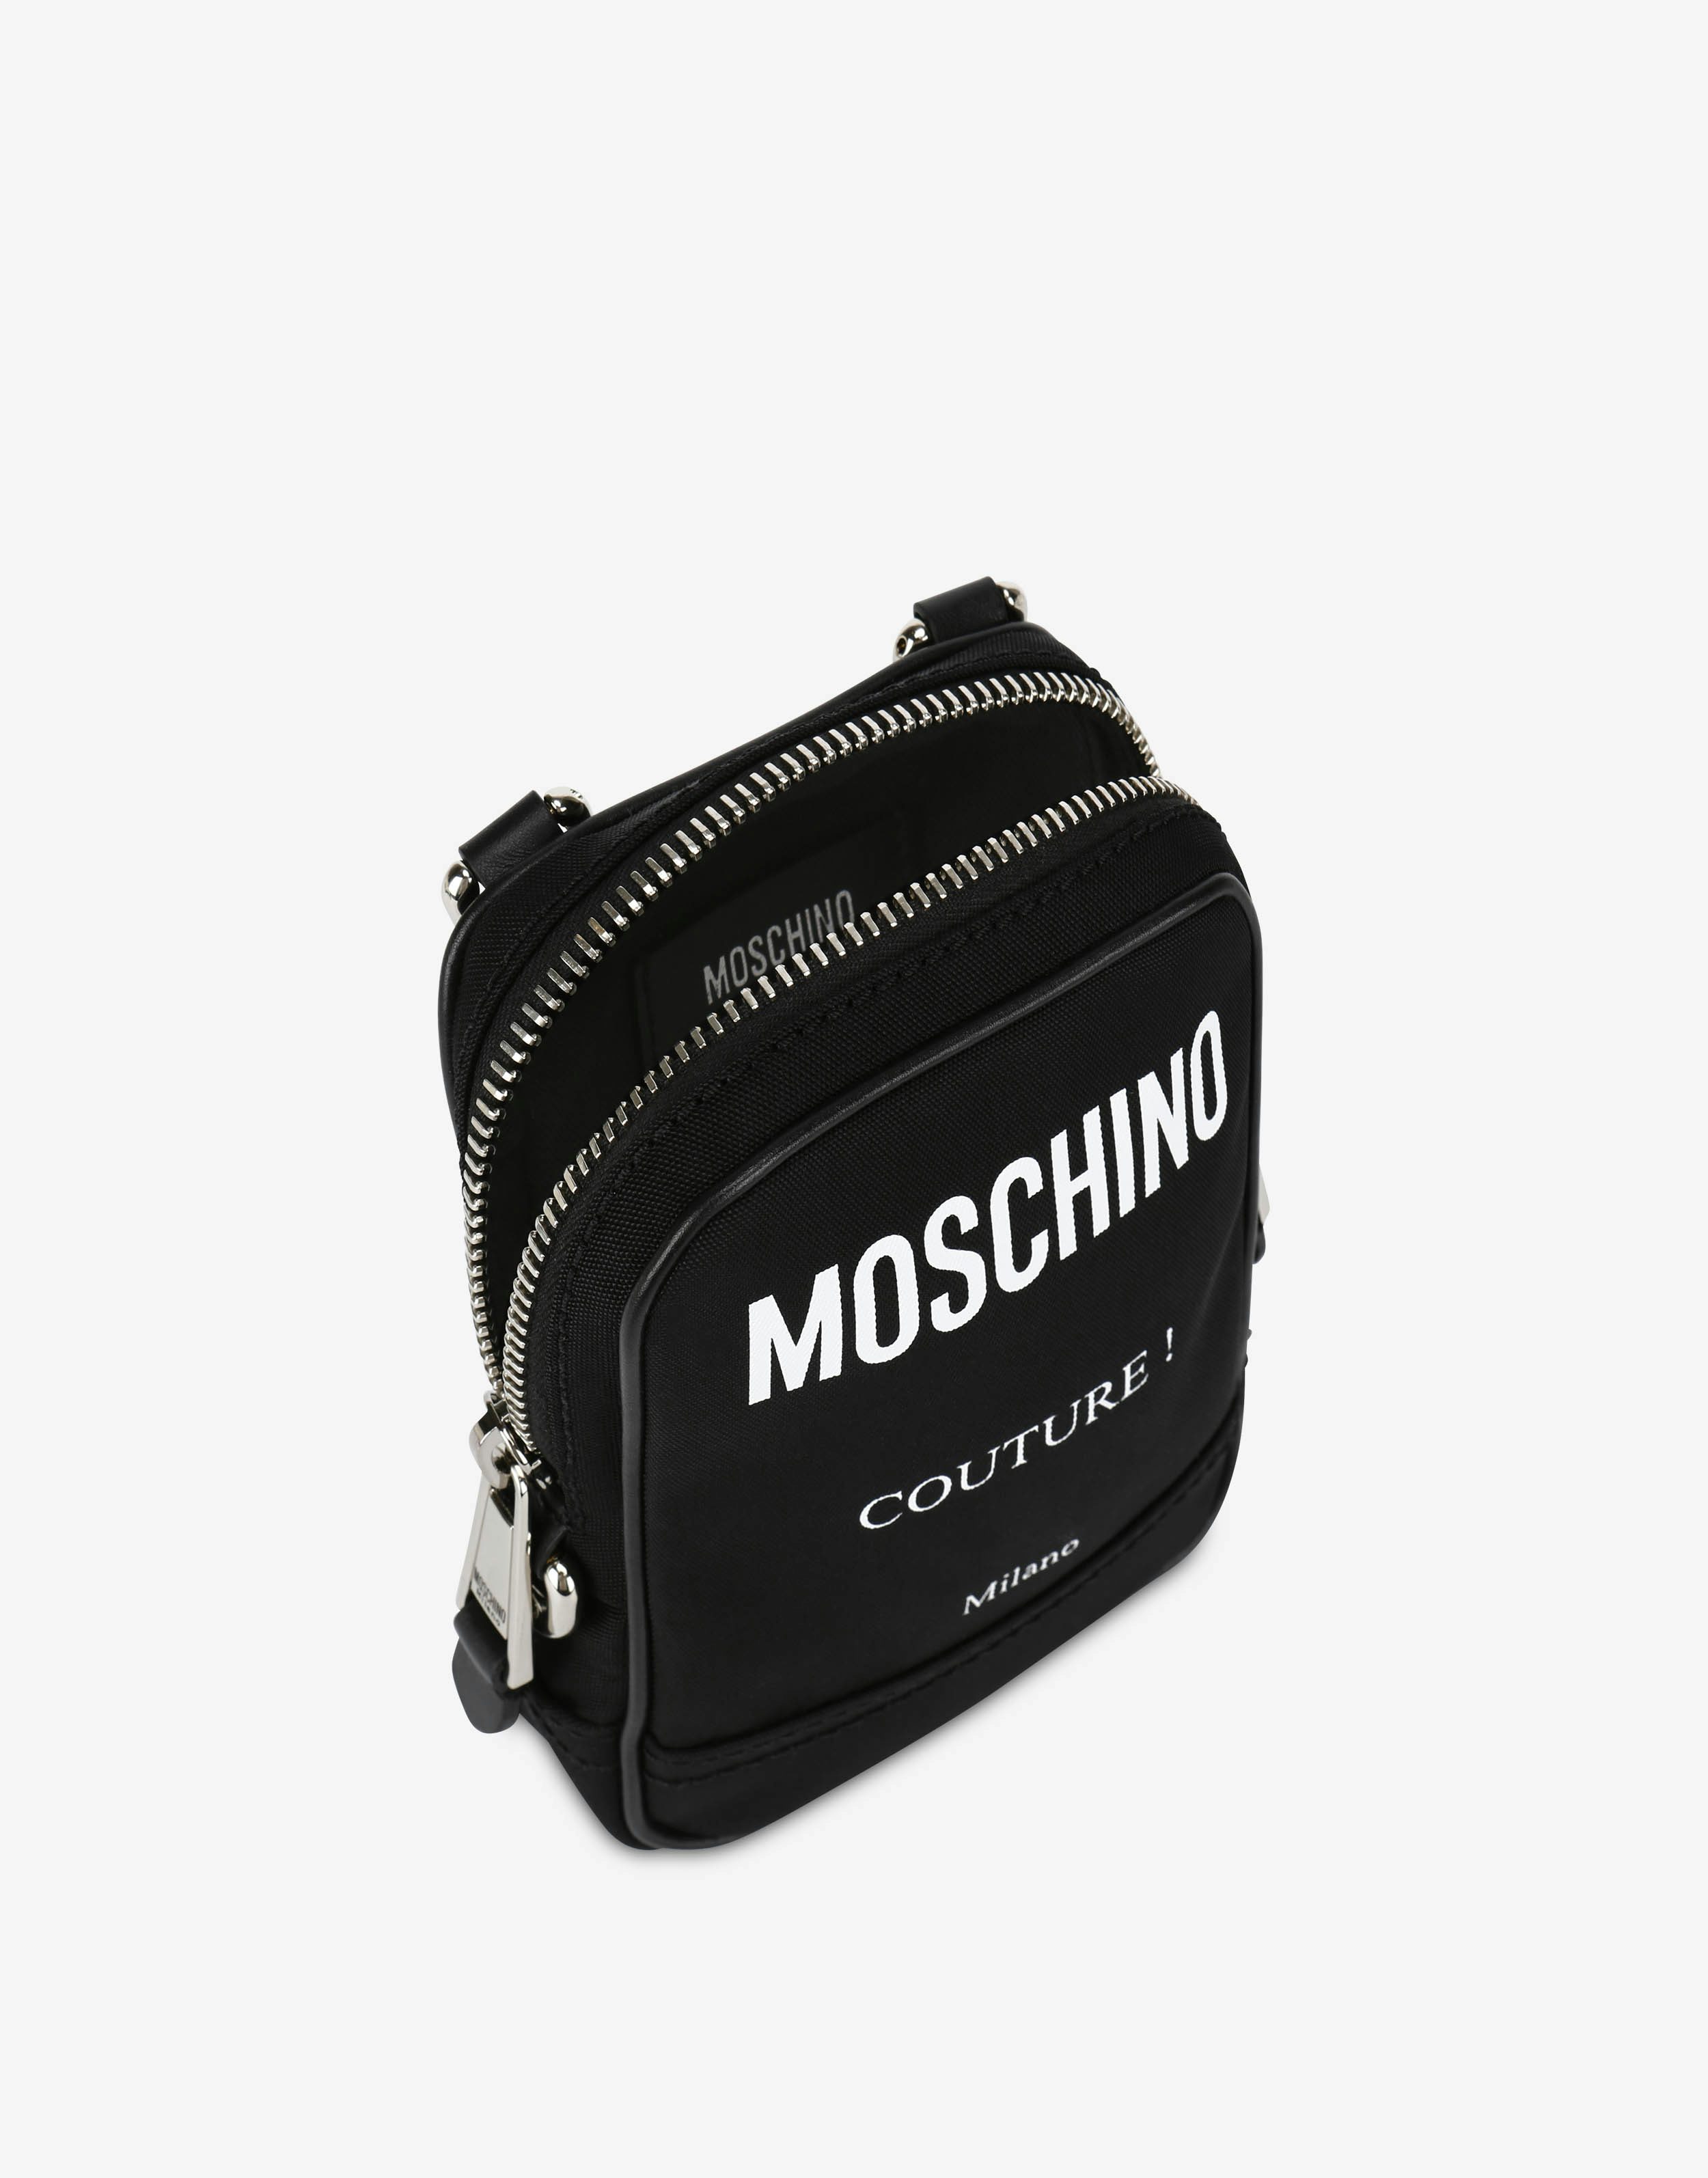 Tasche aus Nylon cordura Moschino Couture 1